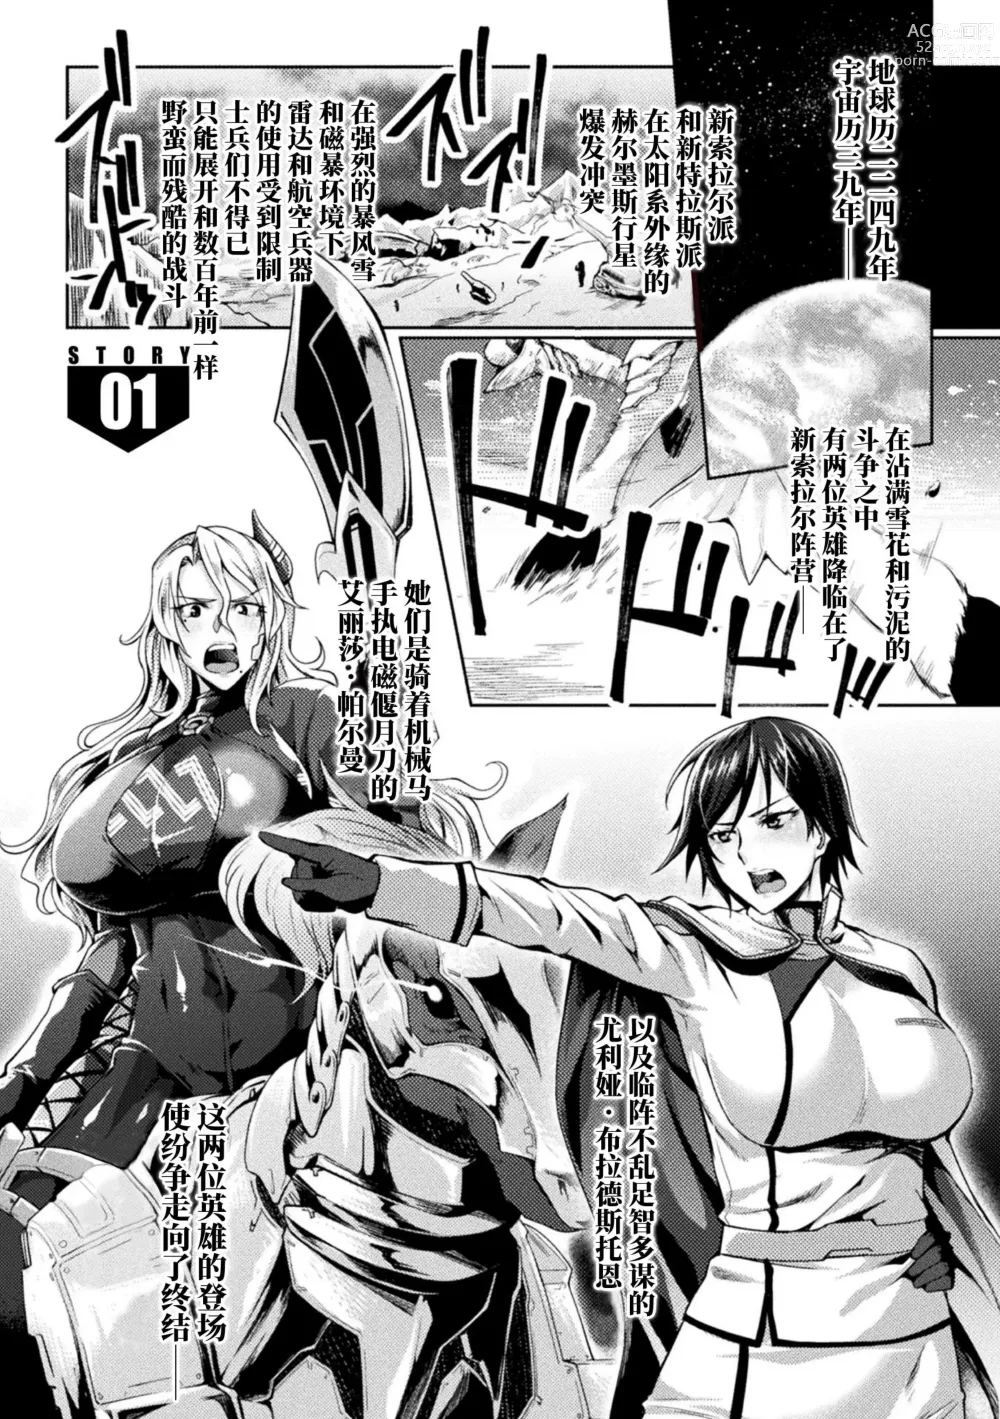 Page 5 of manga PRISON ACADEMIA THE COMIC